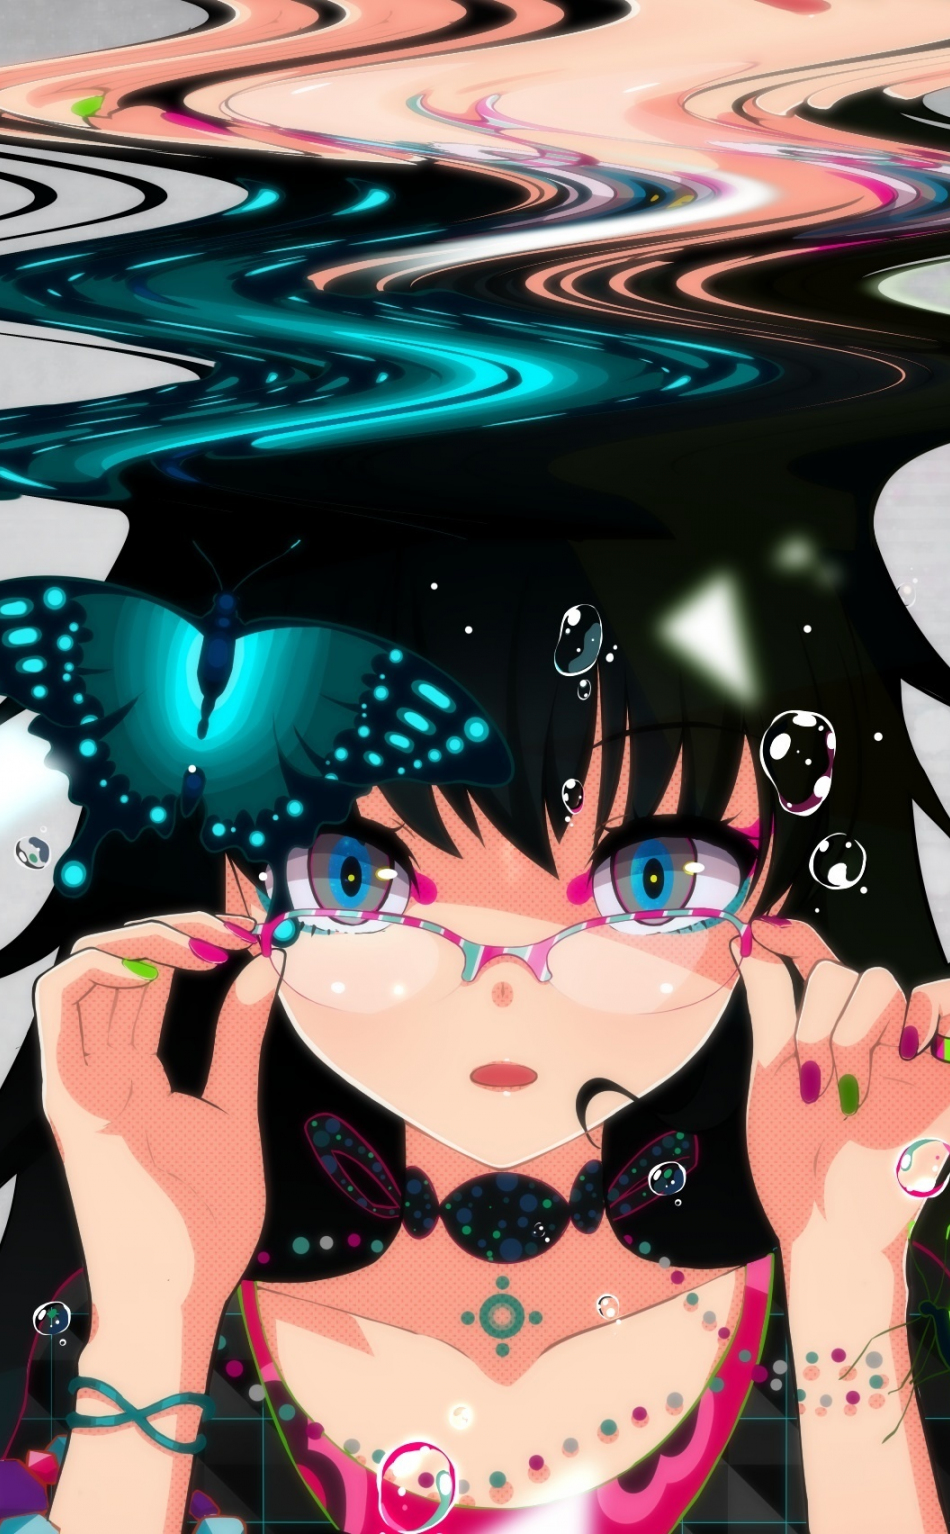 Download wallpaper 950x1534 anime girl, glitch art, bubbles, art, iphone,  950x1534 hd background, 6279